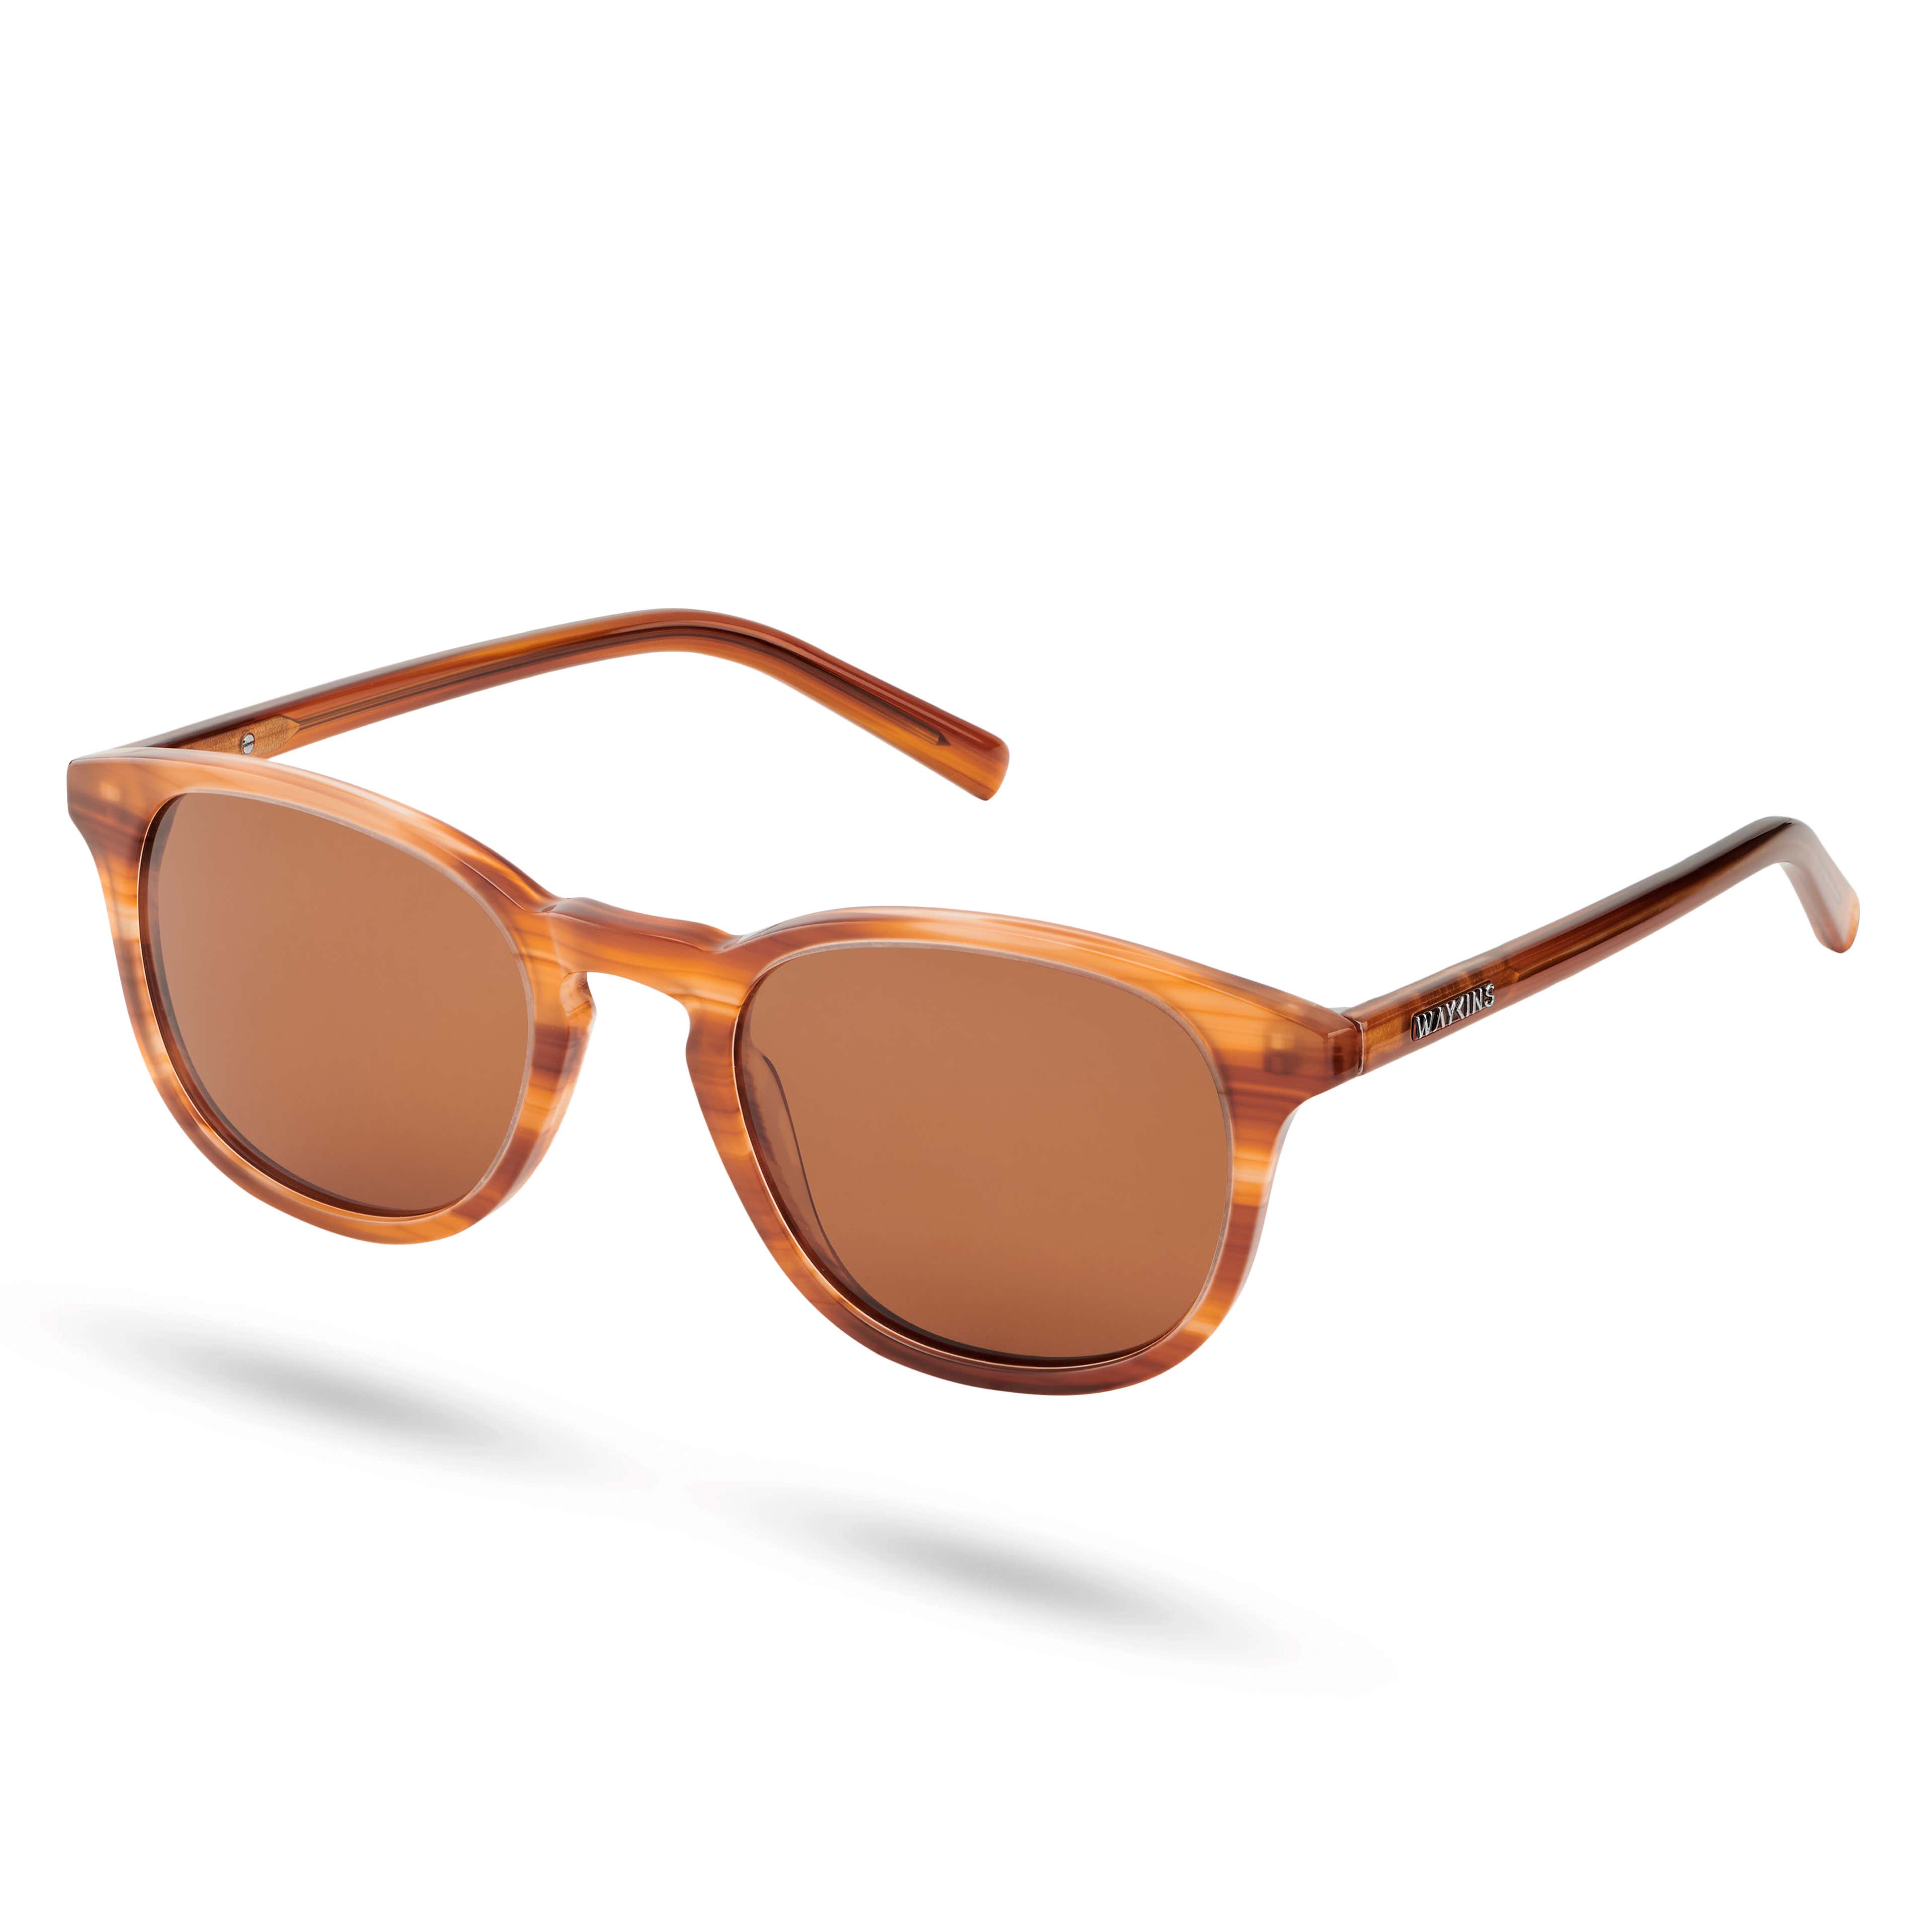 Warrick Thea Brown & Brown Polarized Sunglasses